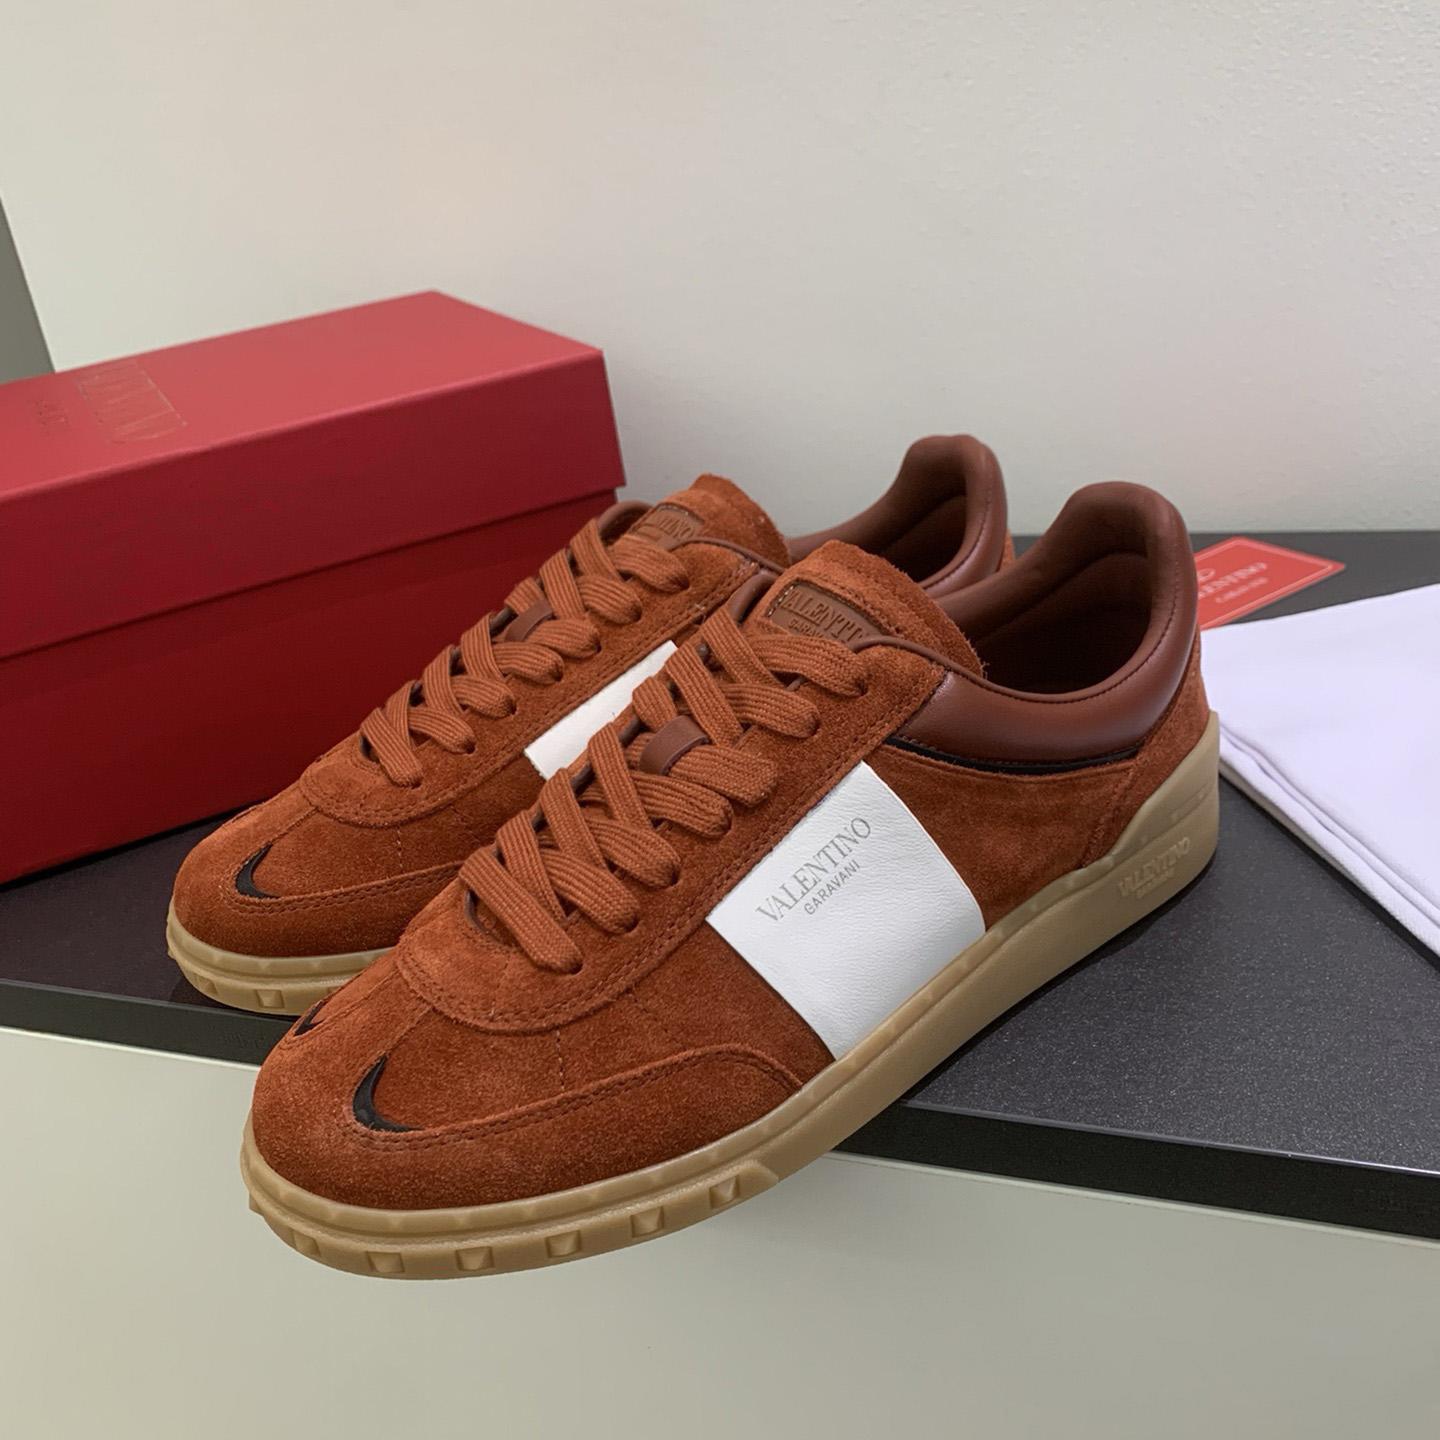 Valenti Upvillage Low Top Sneaker In Split Leather And Calfskin Nappa Leather - DesignerGu